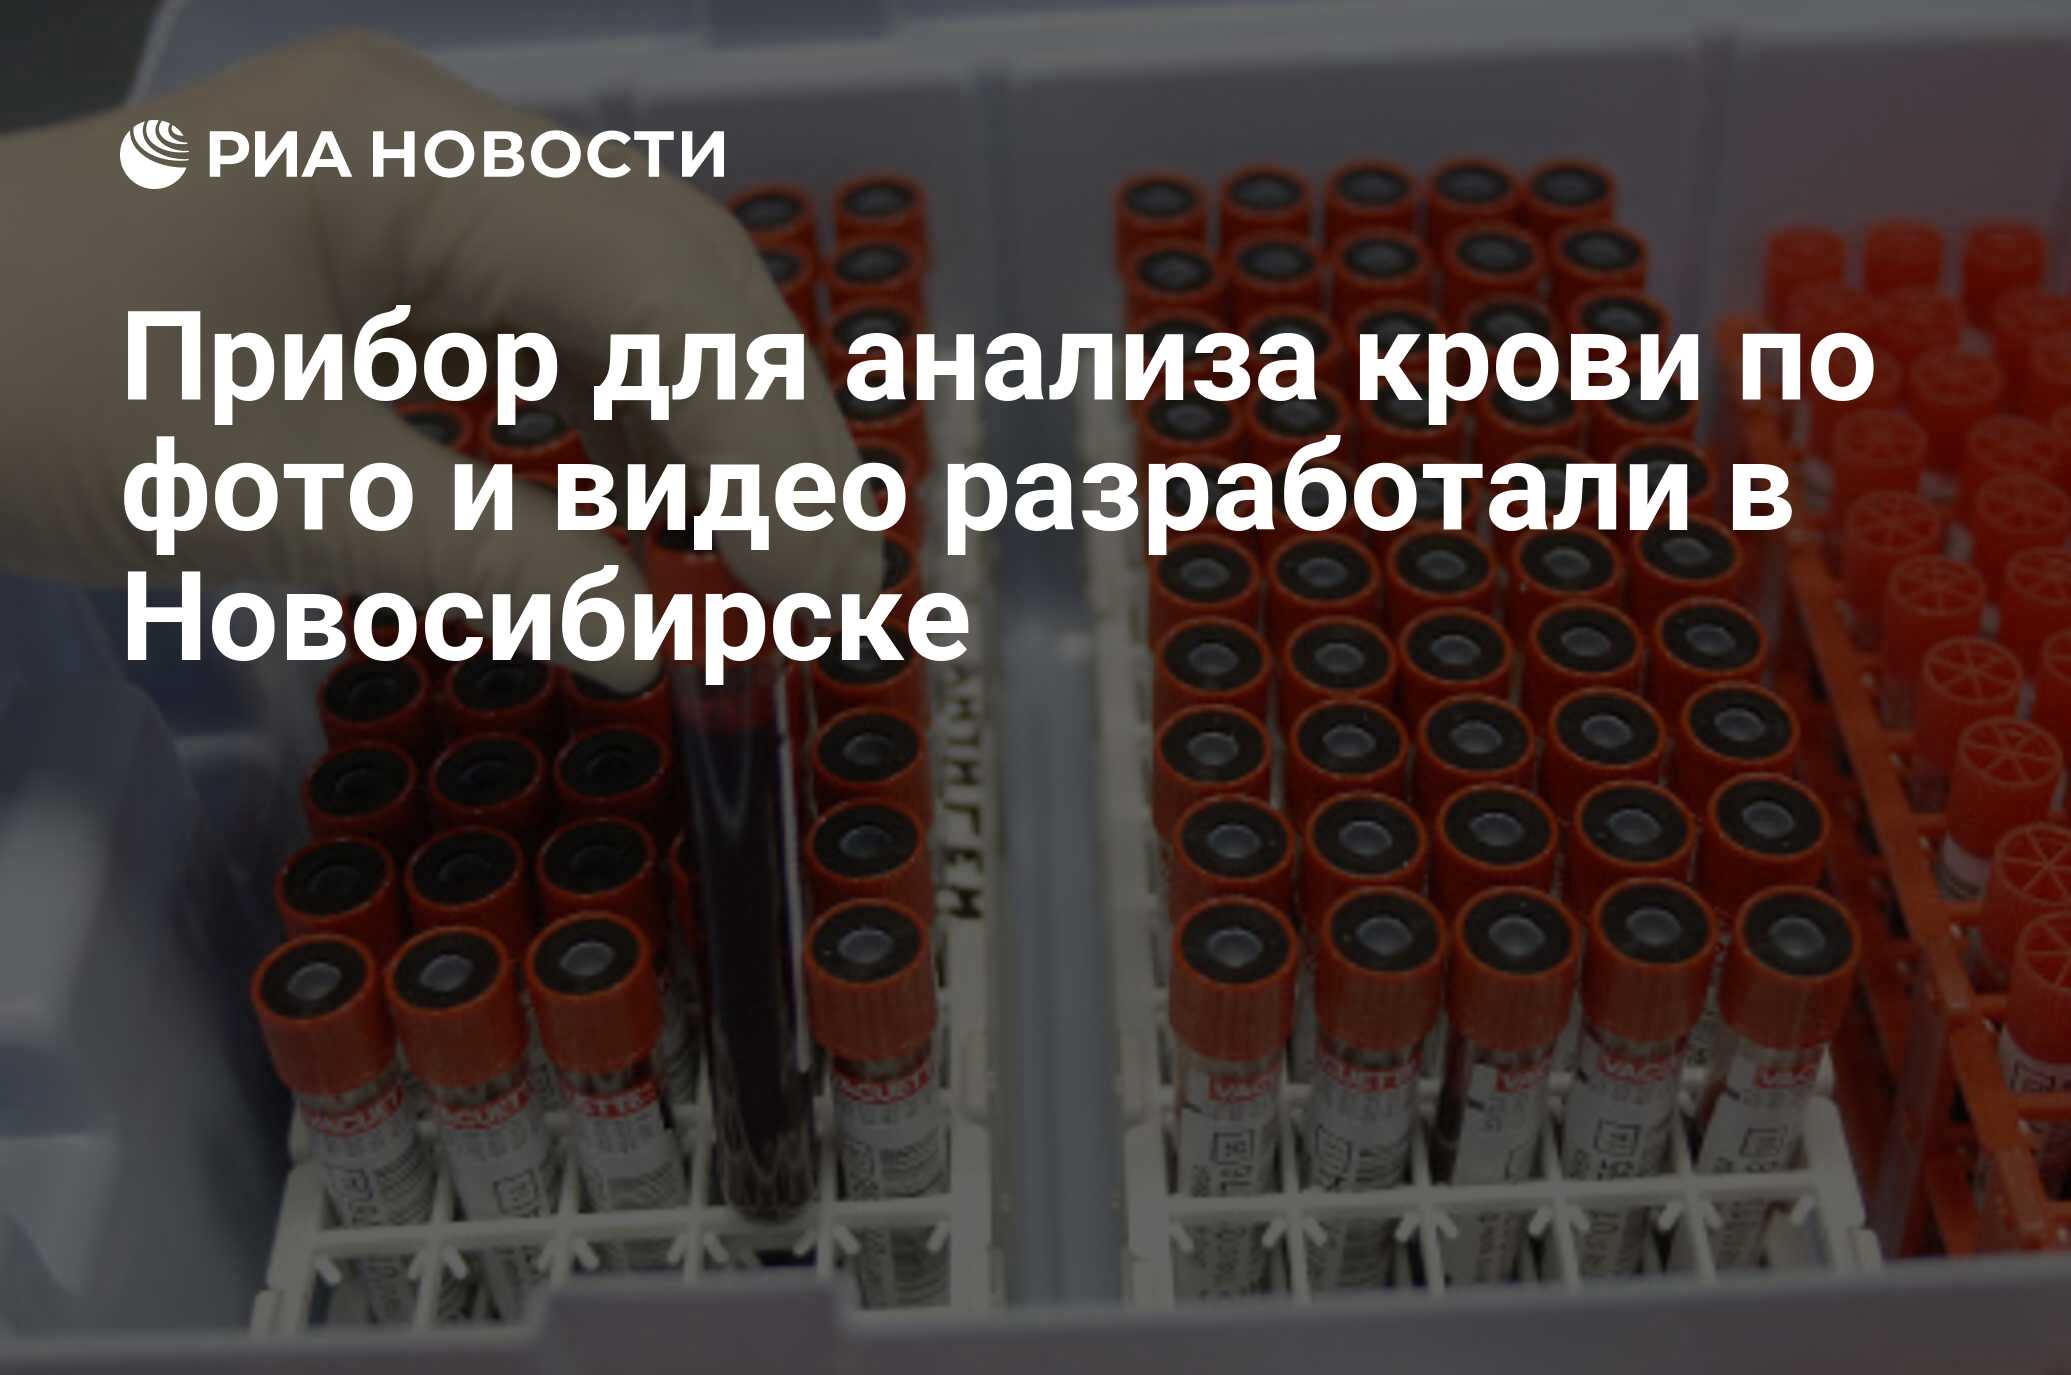 Прибор для анализа крови по фото и видео разработали в Новосибирске - РИА  Новости, 01.03.2020